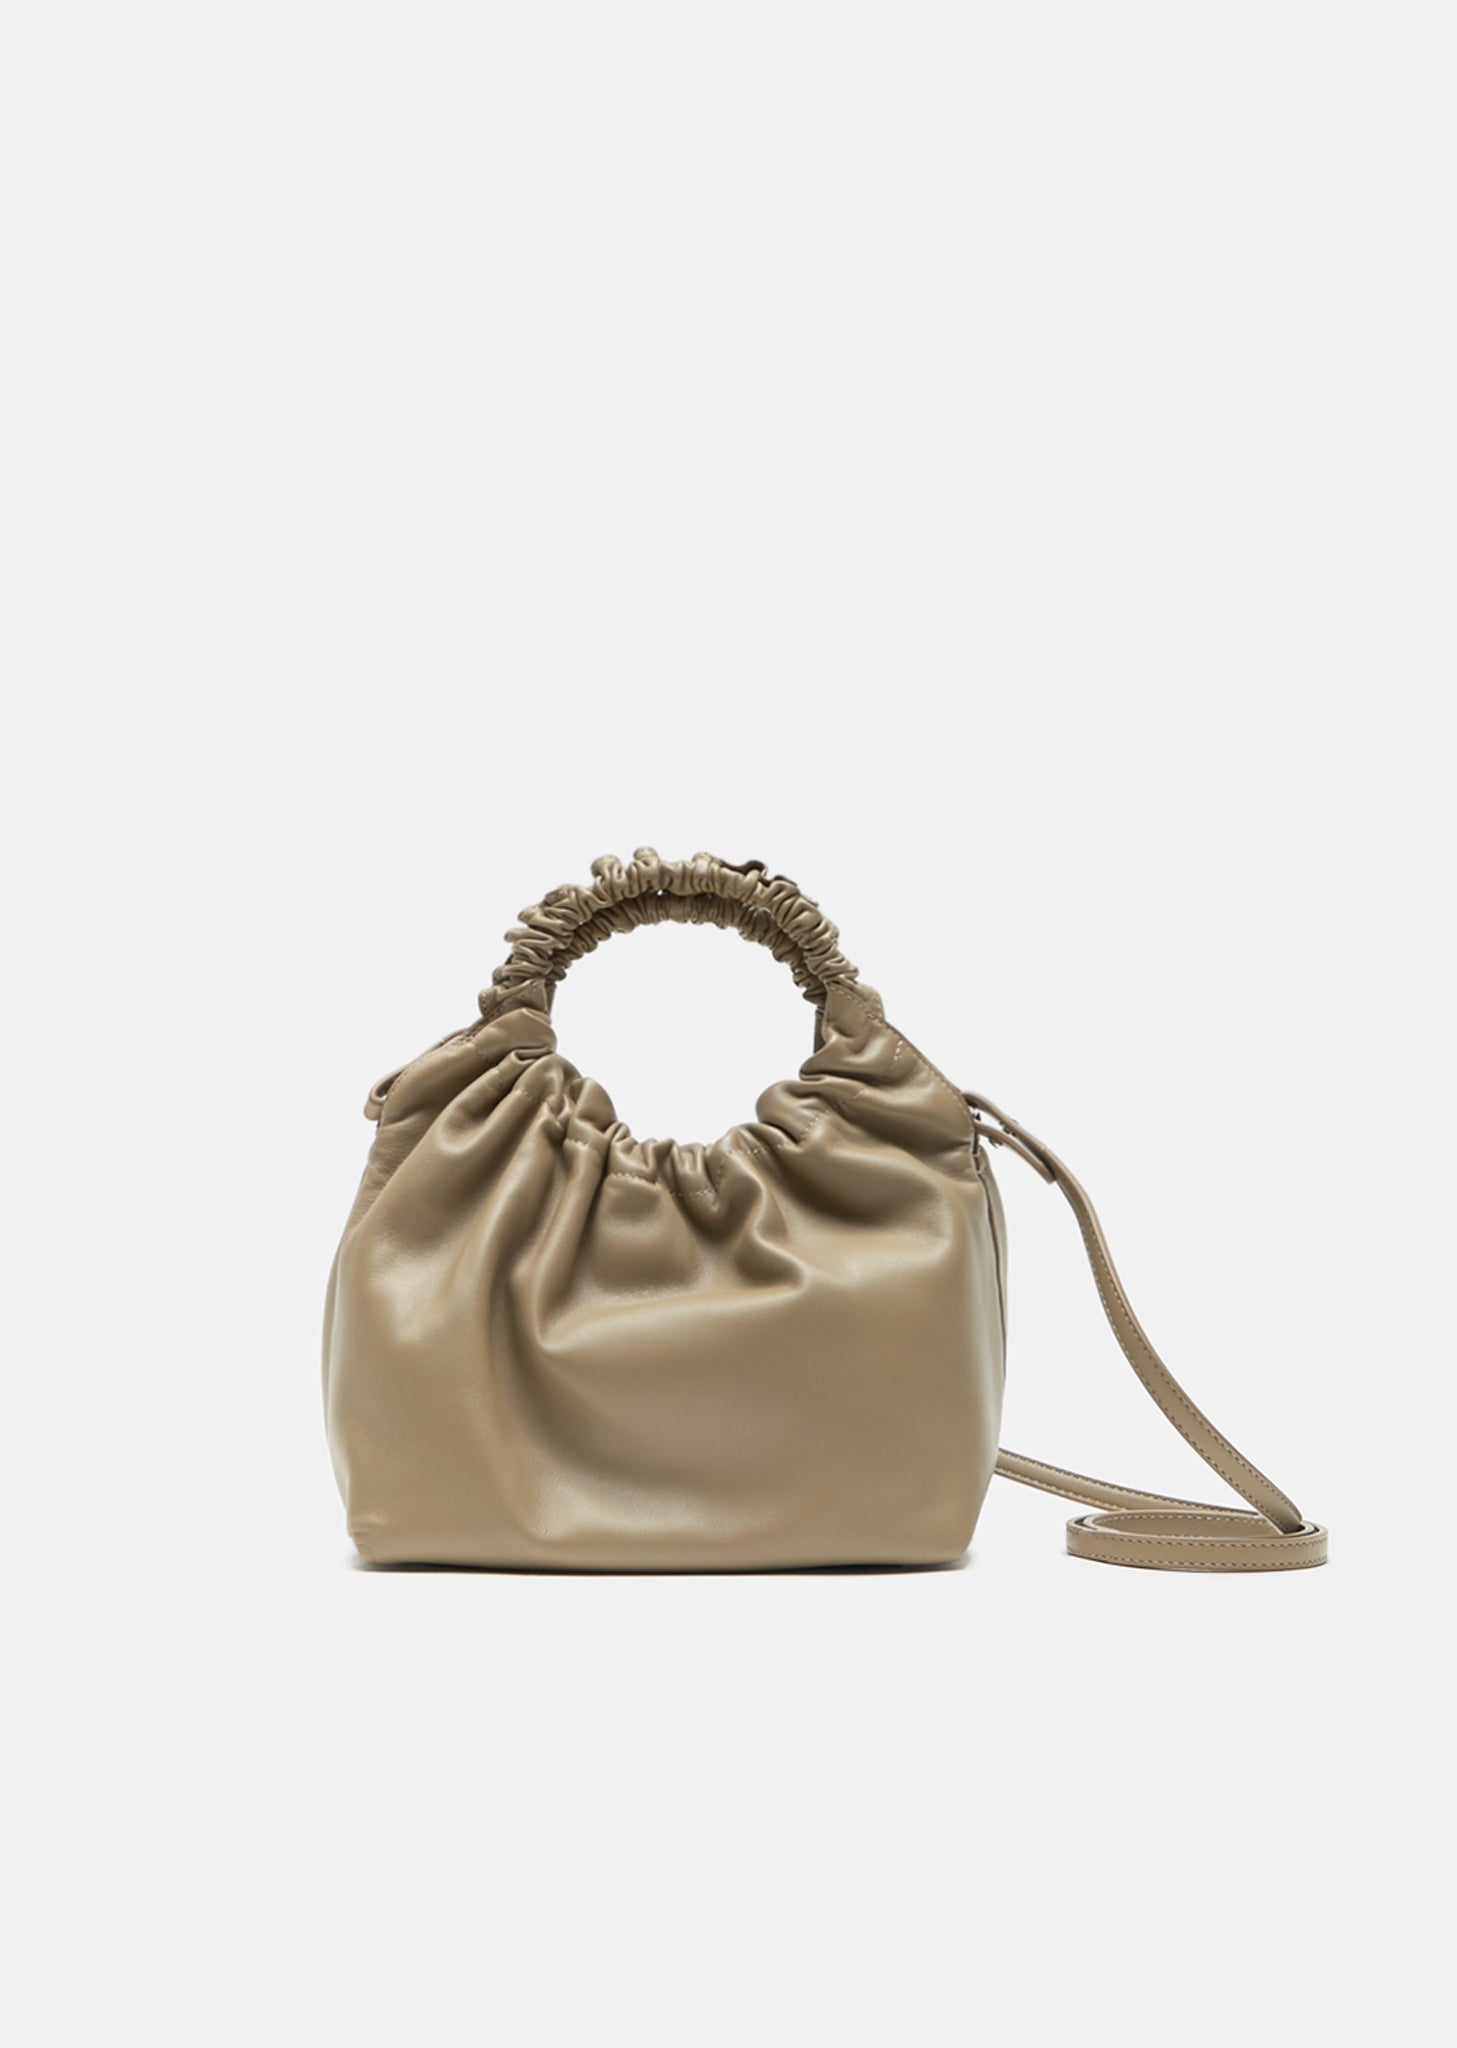 Think Royln Cell Diagonal 2.0 - Small (Cobalt) Handbags - ShopStyle  Shoulder Bags